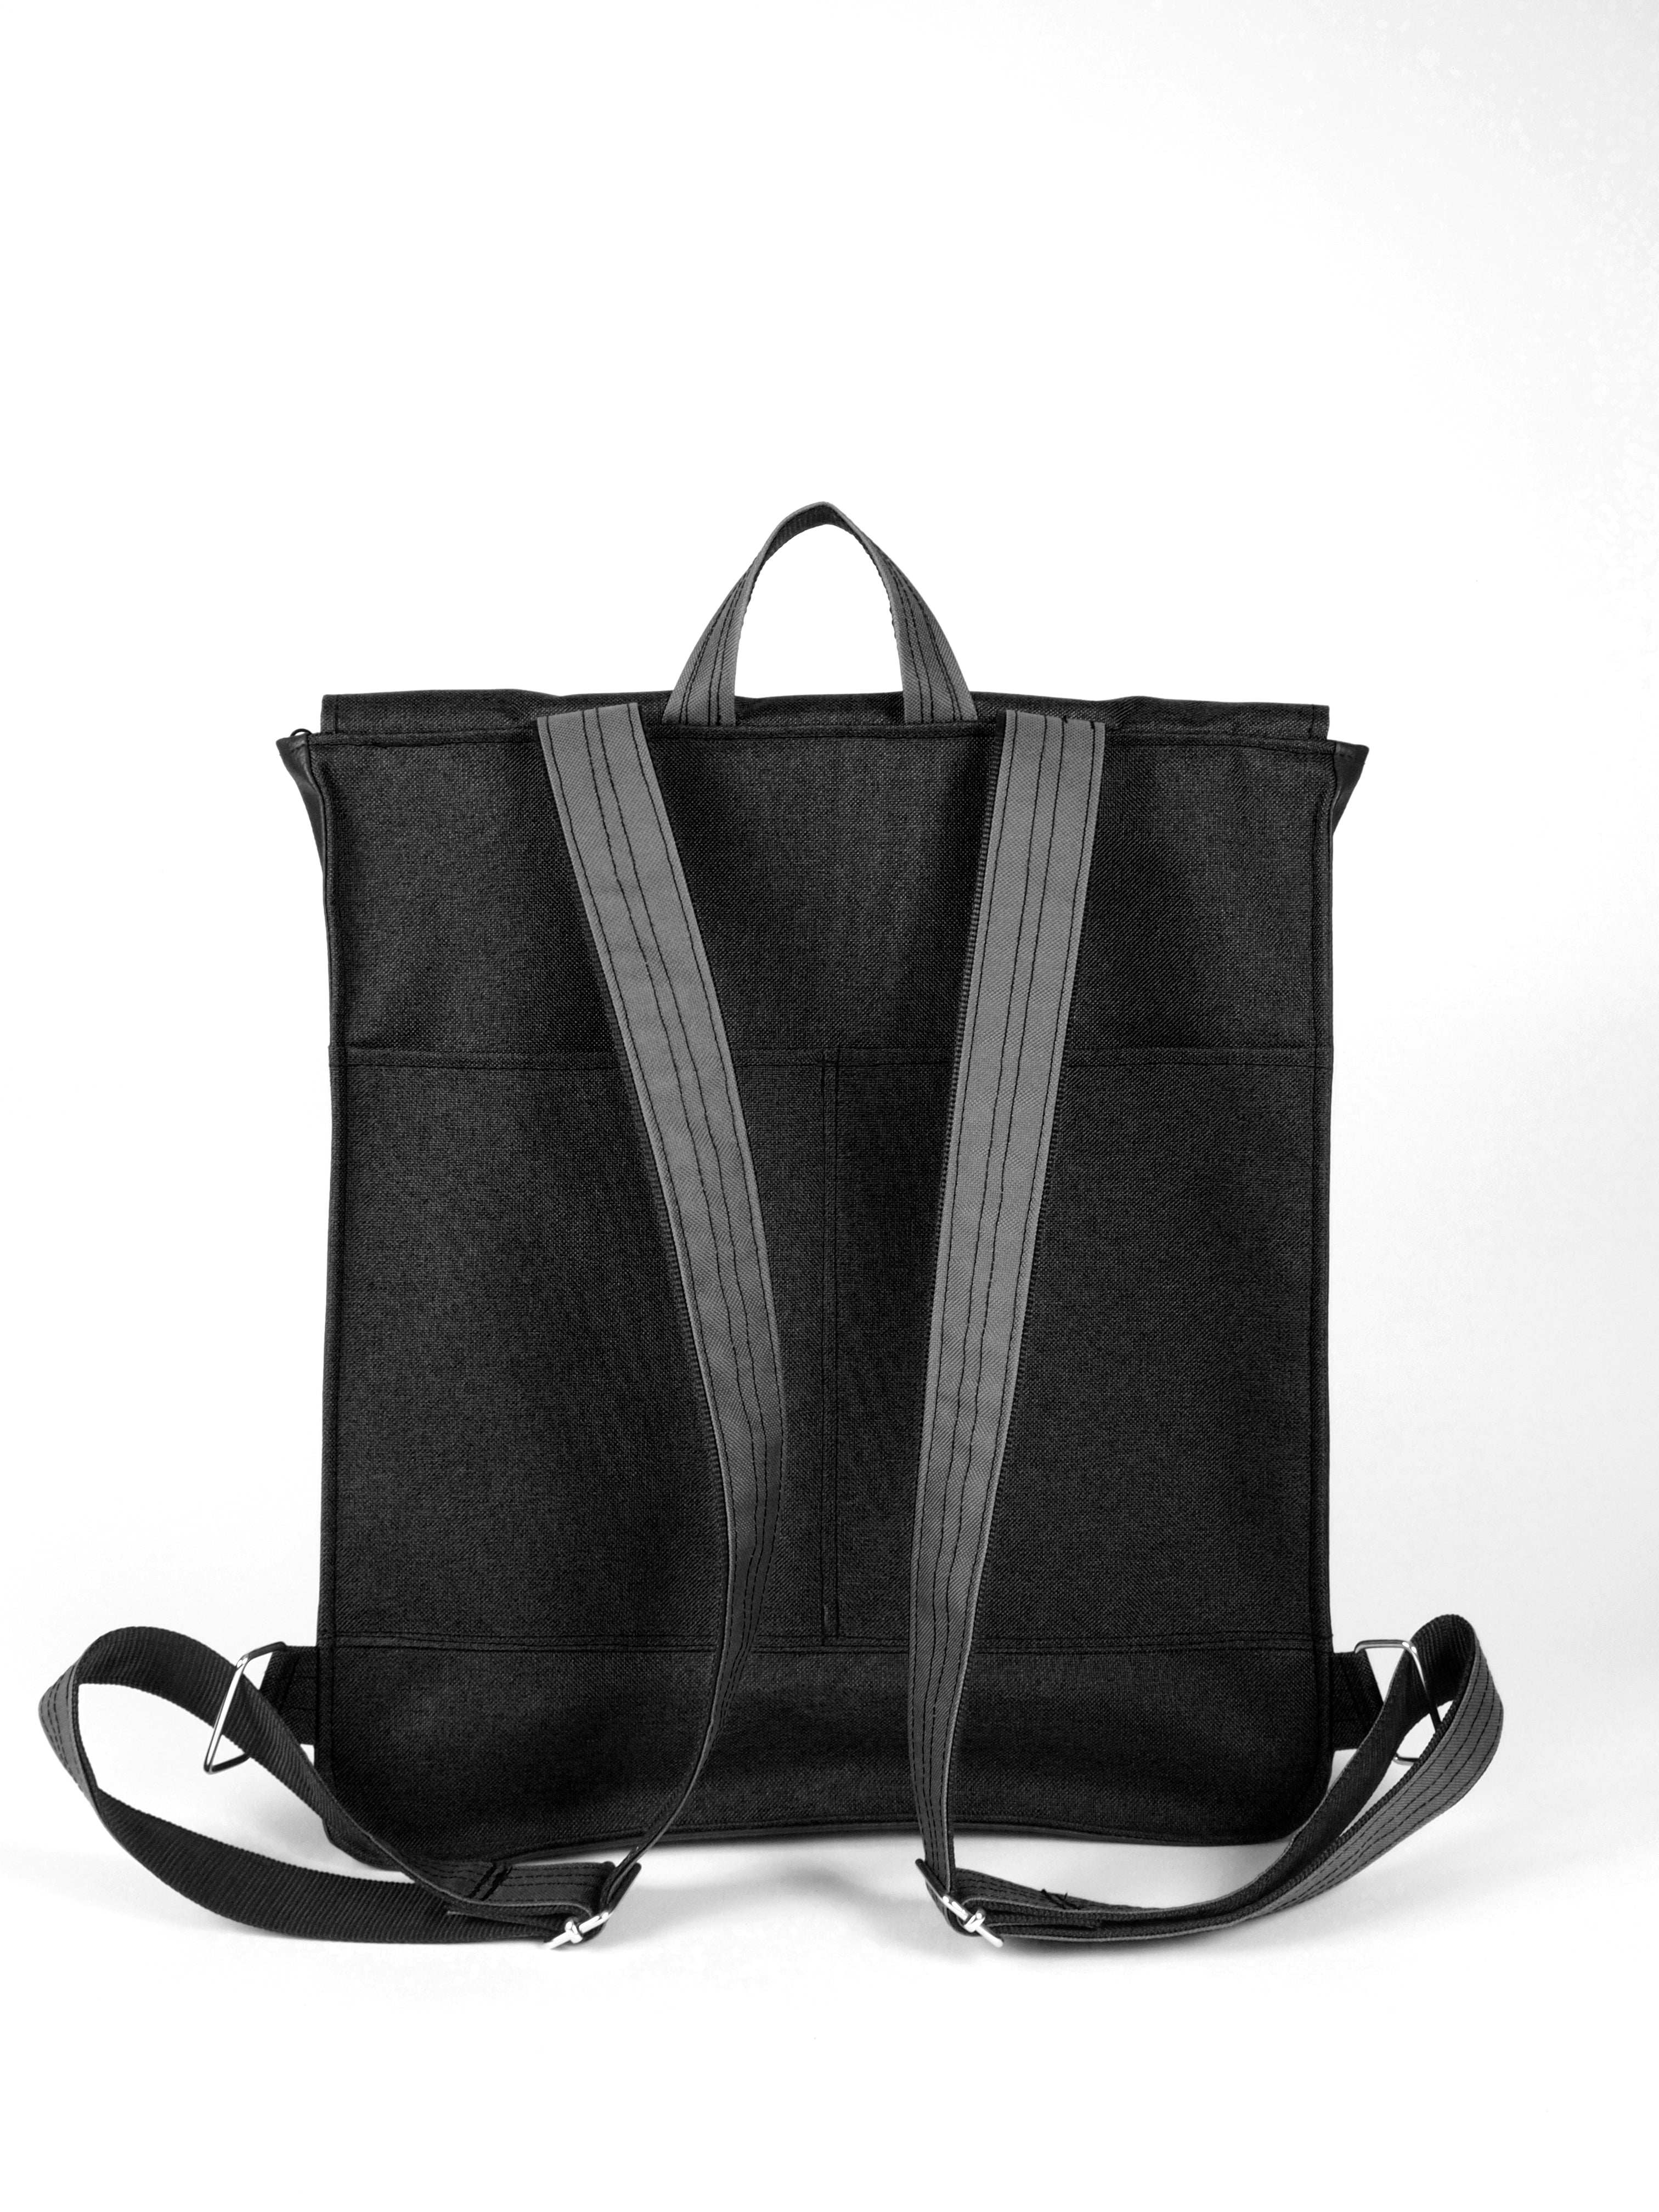 Bardo work backpack - black&green - Premium Bardo work backpack from BARDO ART WORKS - Just lvblue, dark blue, handemade, laptop backpack, unisex, vegan leather, water proof, work160! Shop now at BARDO ART WORKS